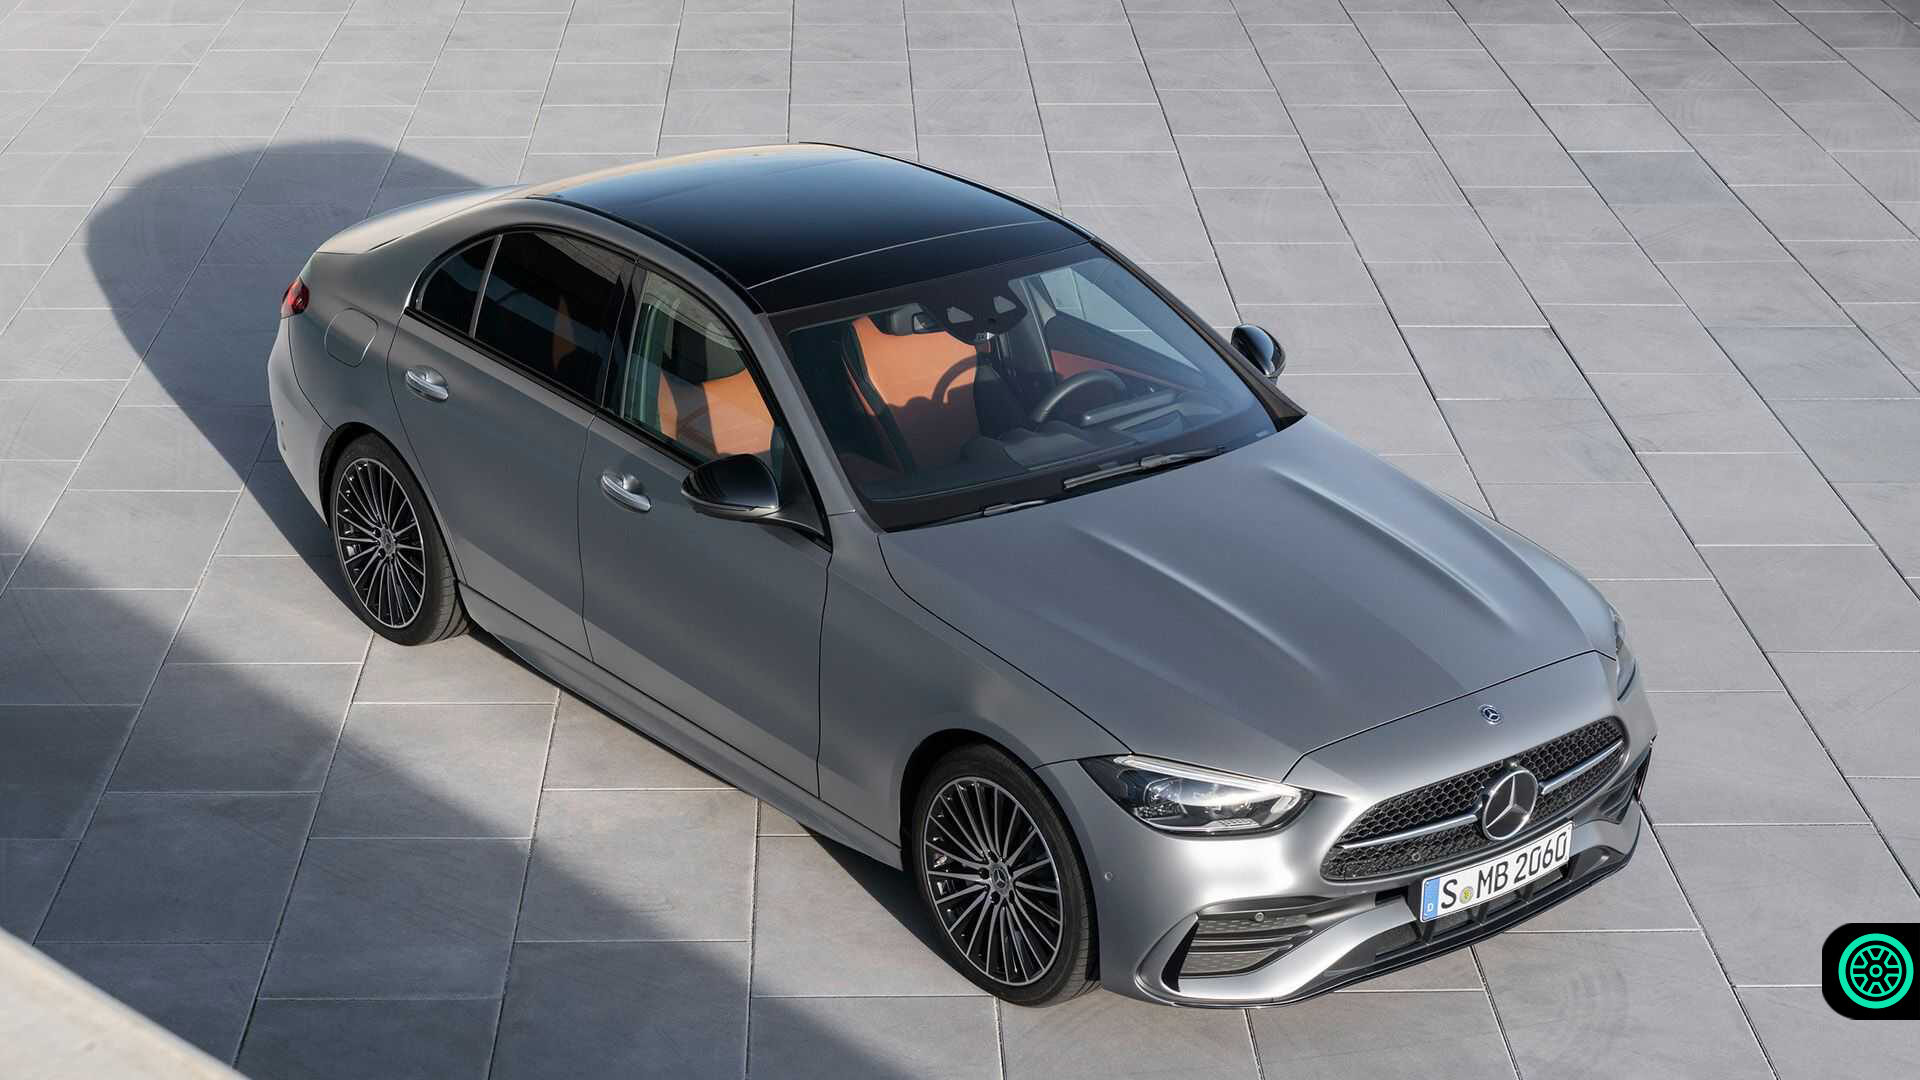 Mercedes-Benz C63 AMG hibrit mi olacak ? 1